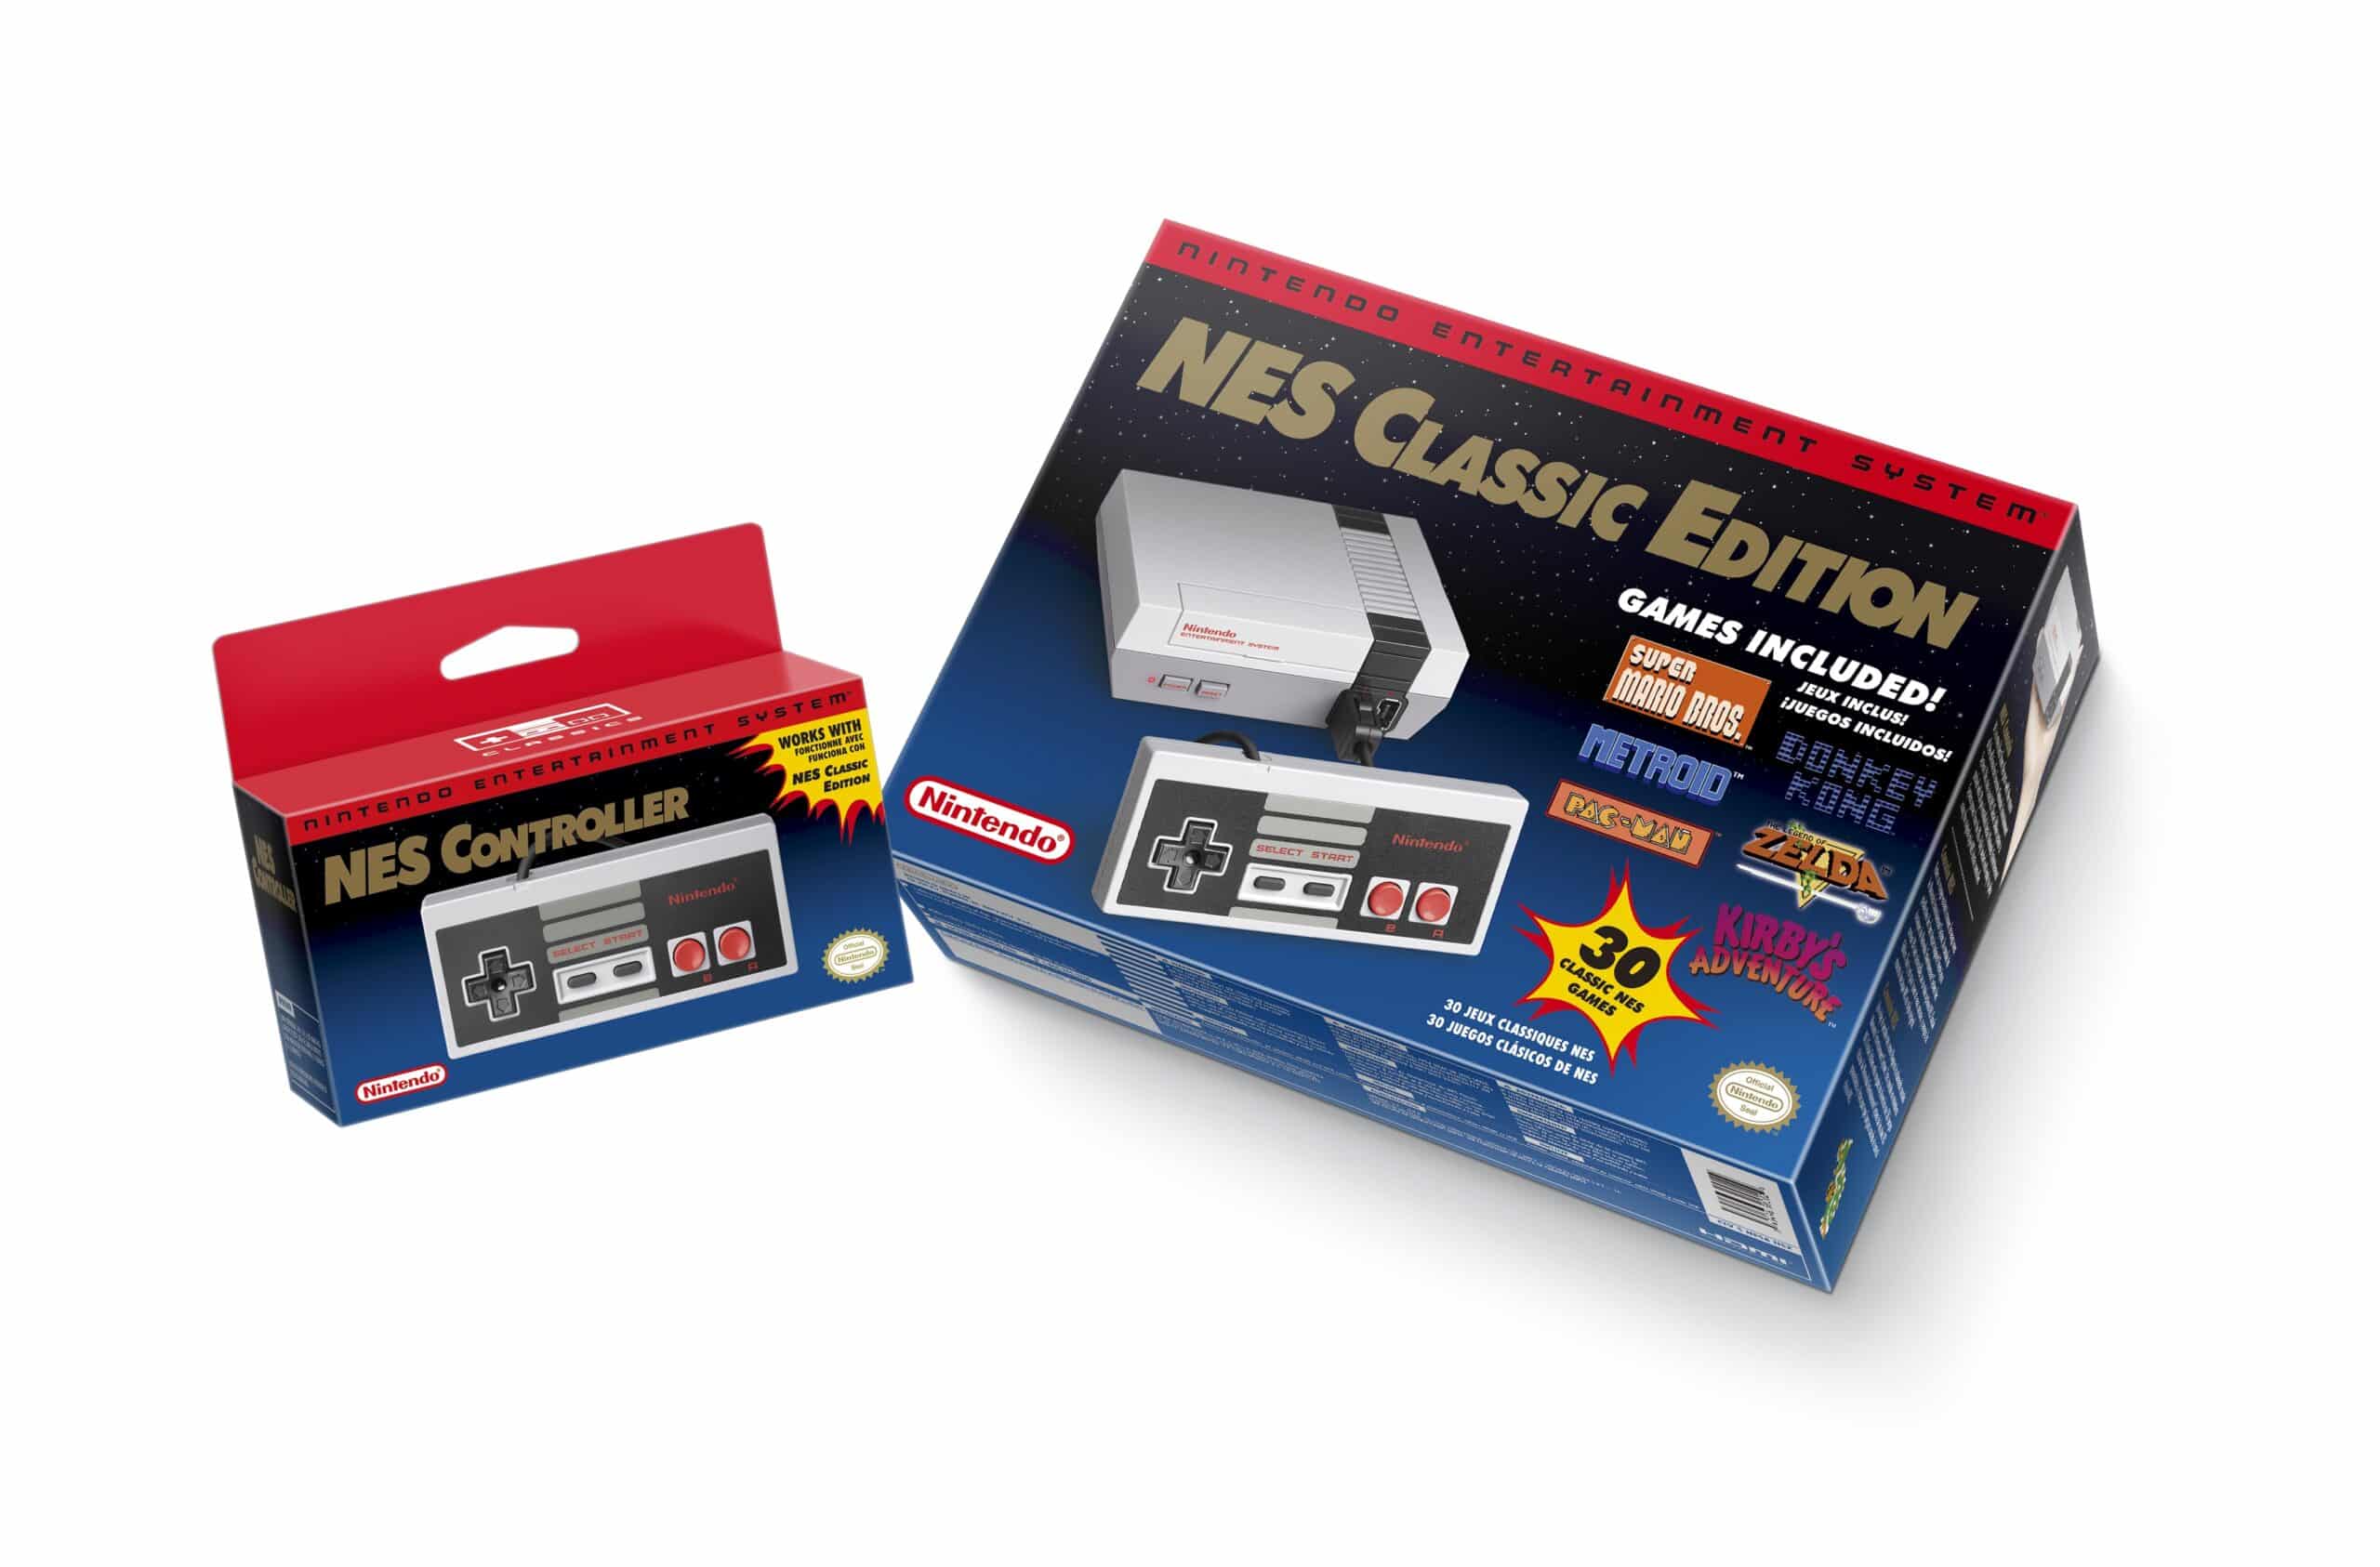 NES Classic Edition Image 2